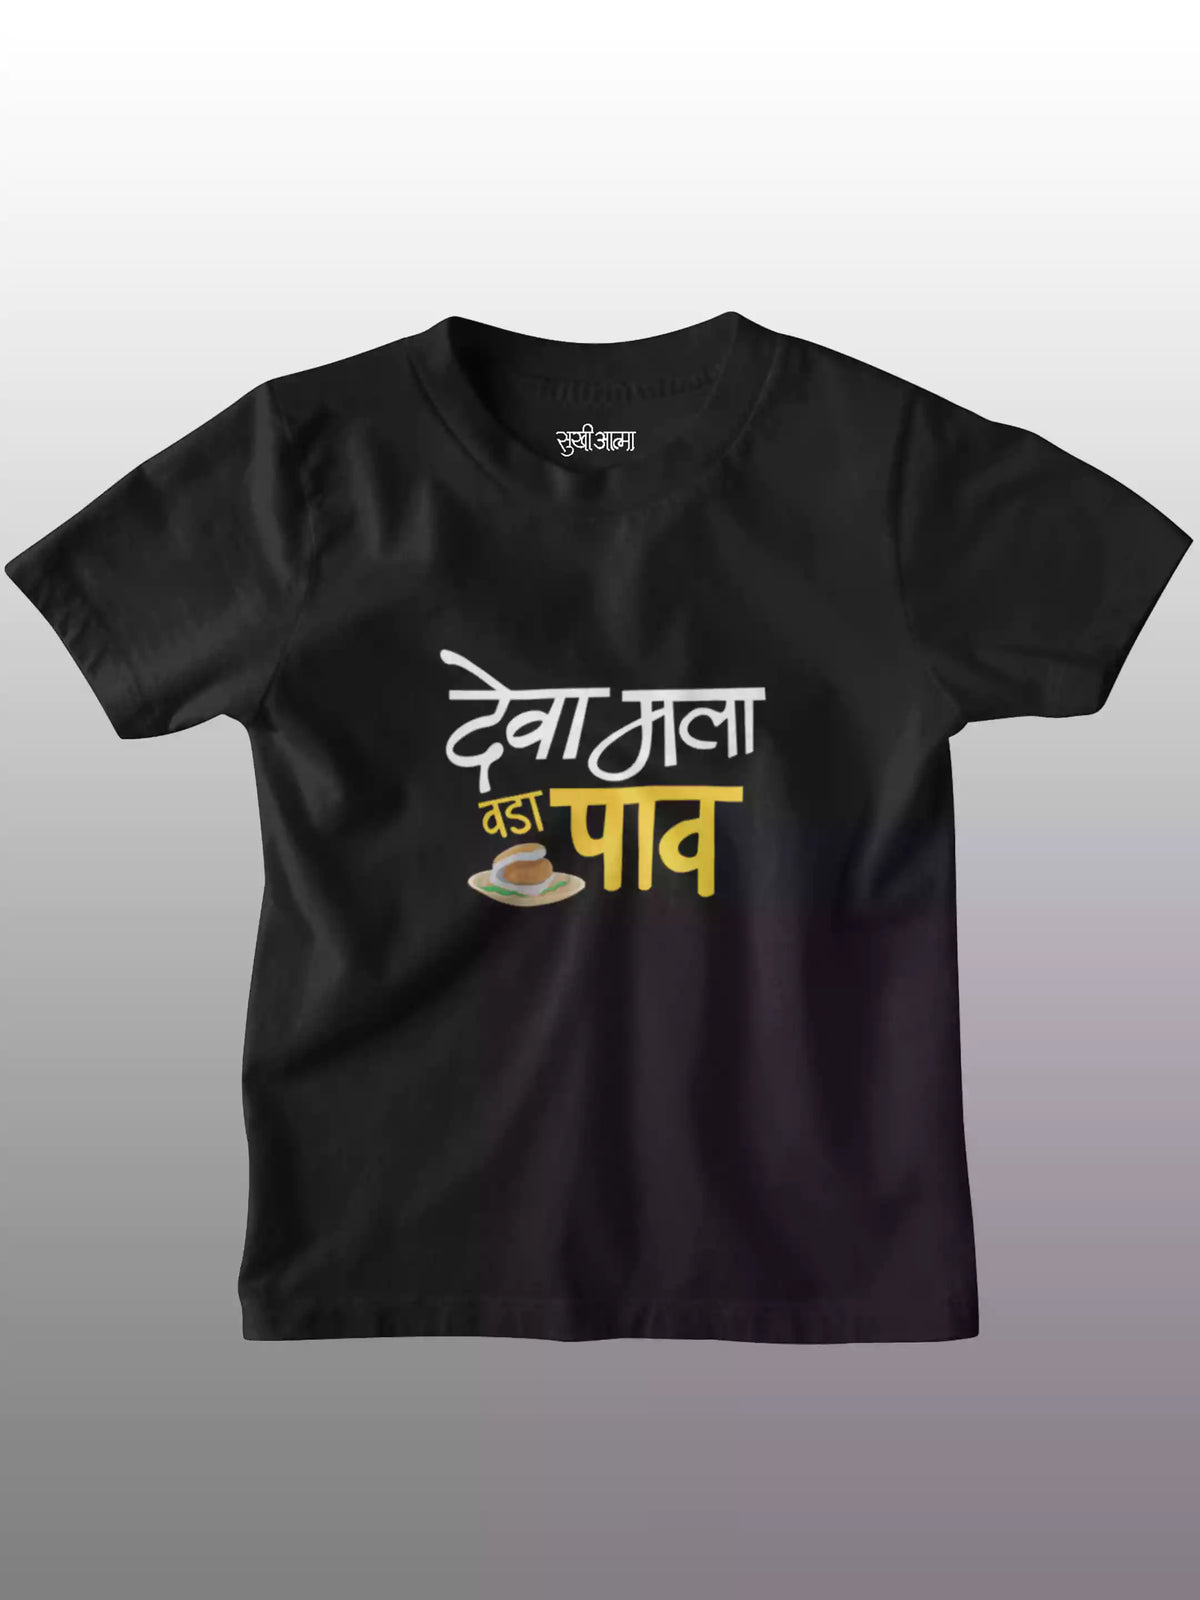 Deva mala vadapav - Sukhiaatma Unisex Graphic Printed Kids T-shirt